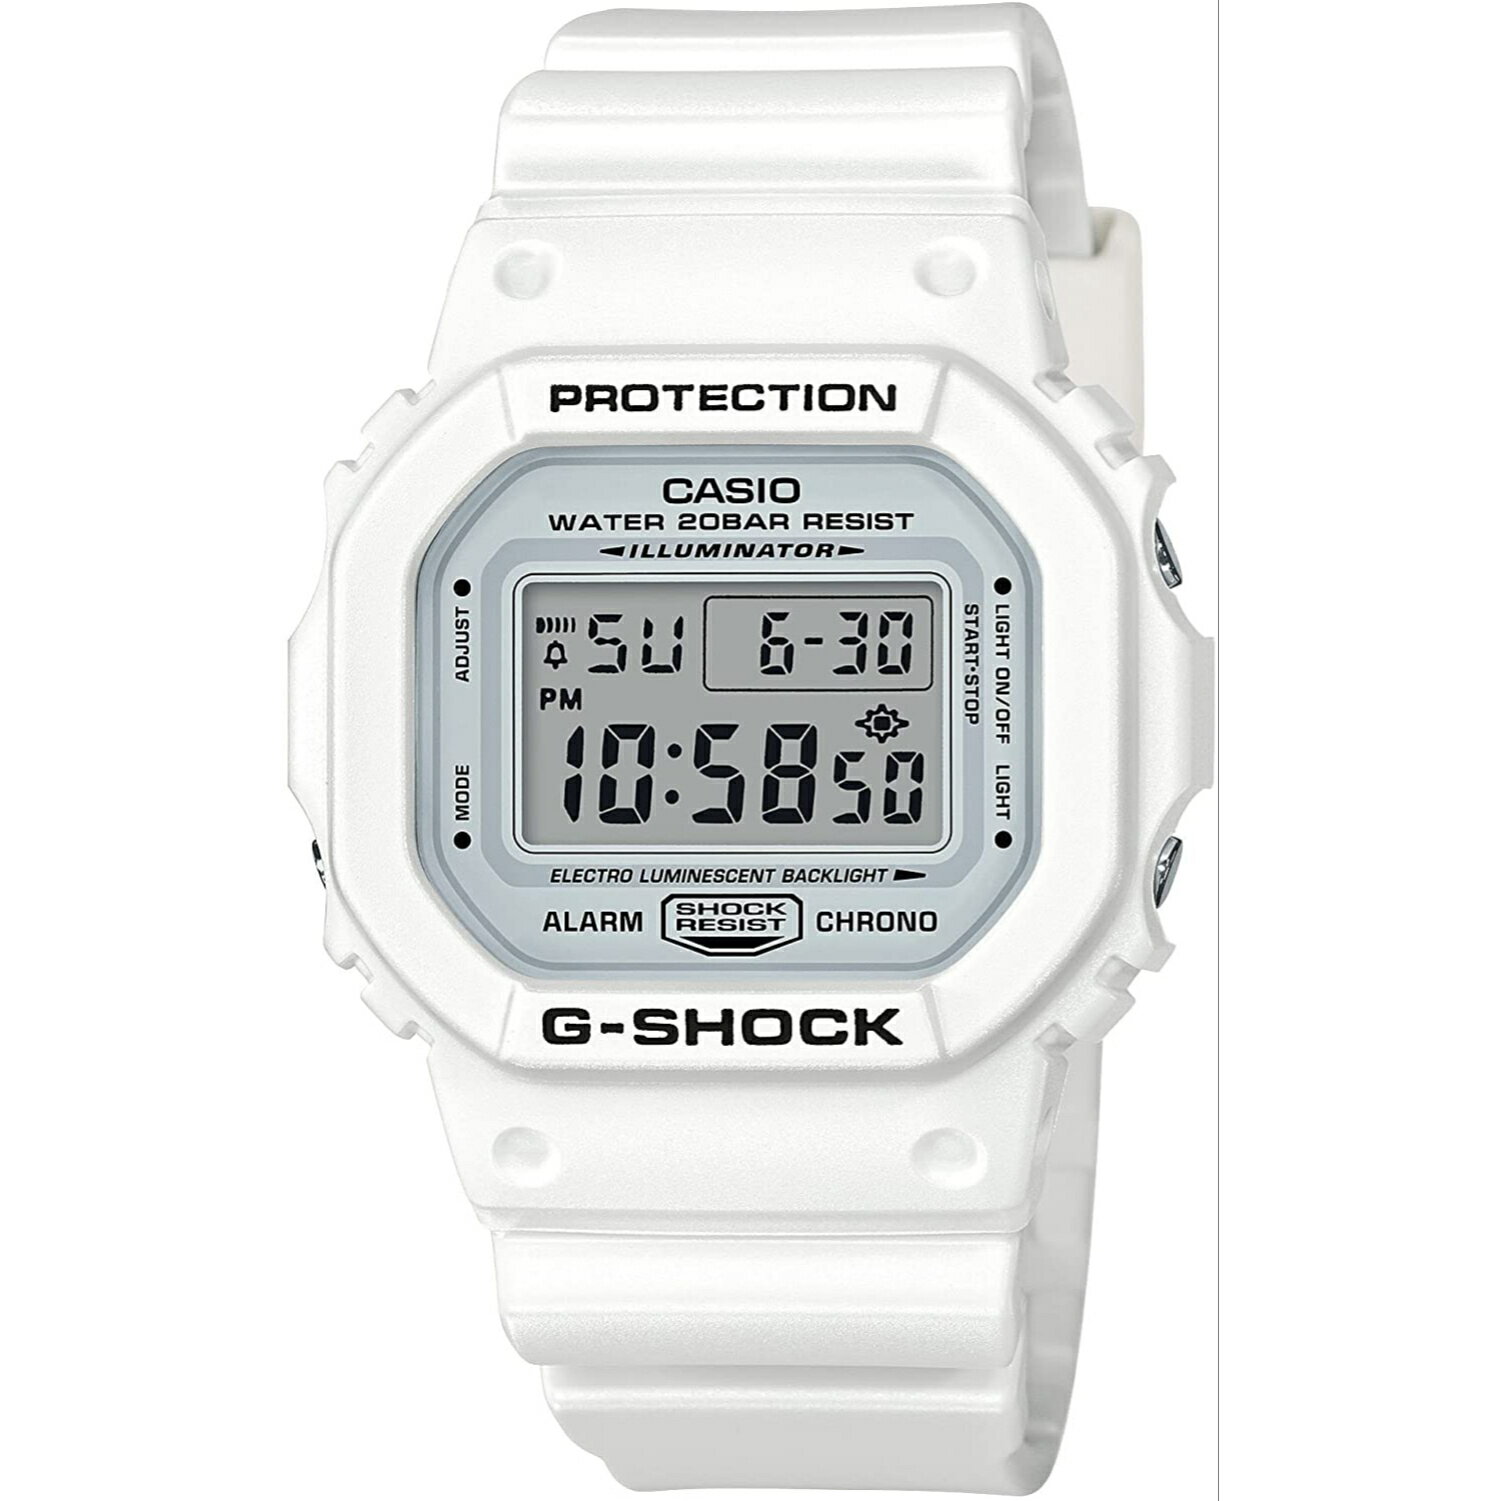 G-SHOCK ジーショック 腕時計 並行輸入品 メンズ men's レディース Ladies デジタル DW-5600MW-7 マリンホワイト